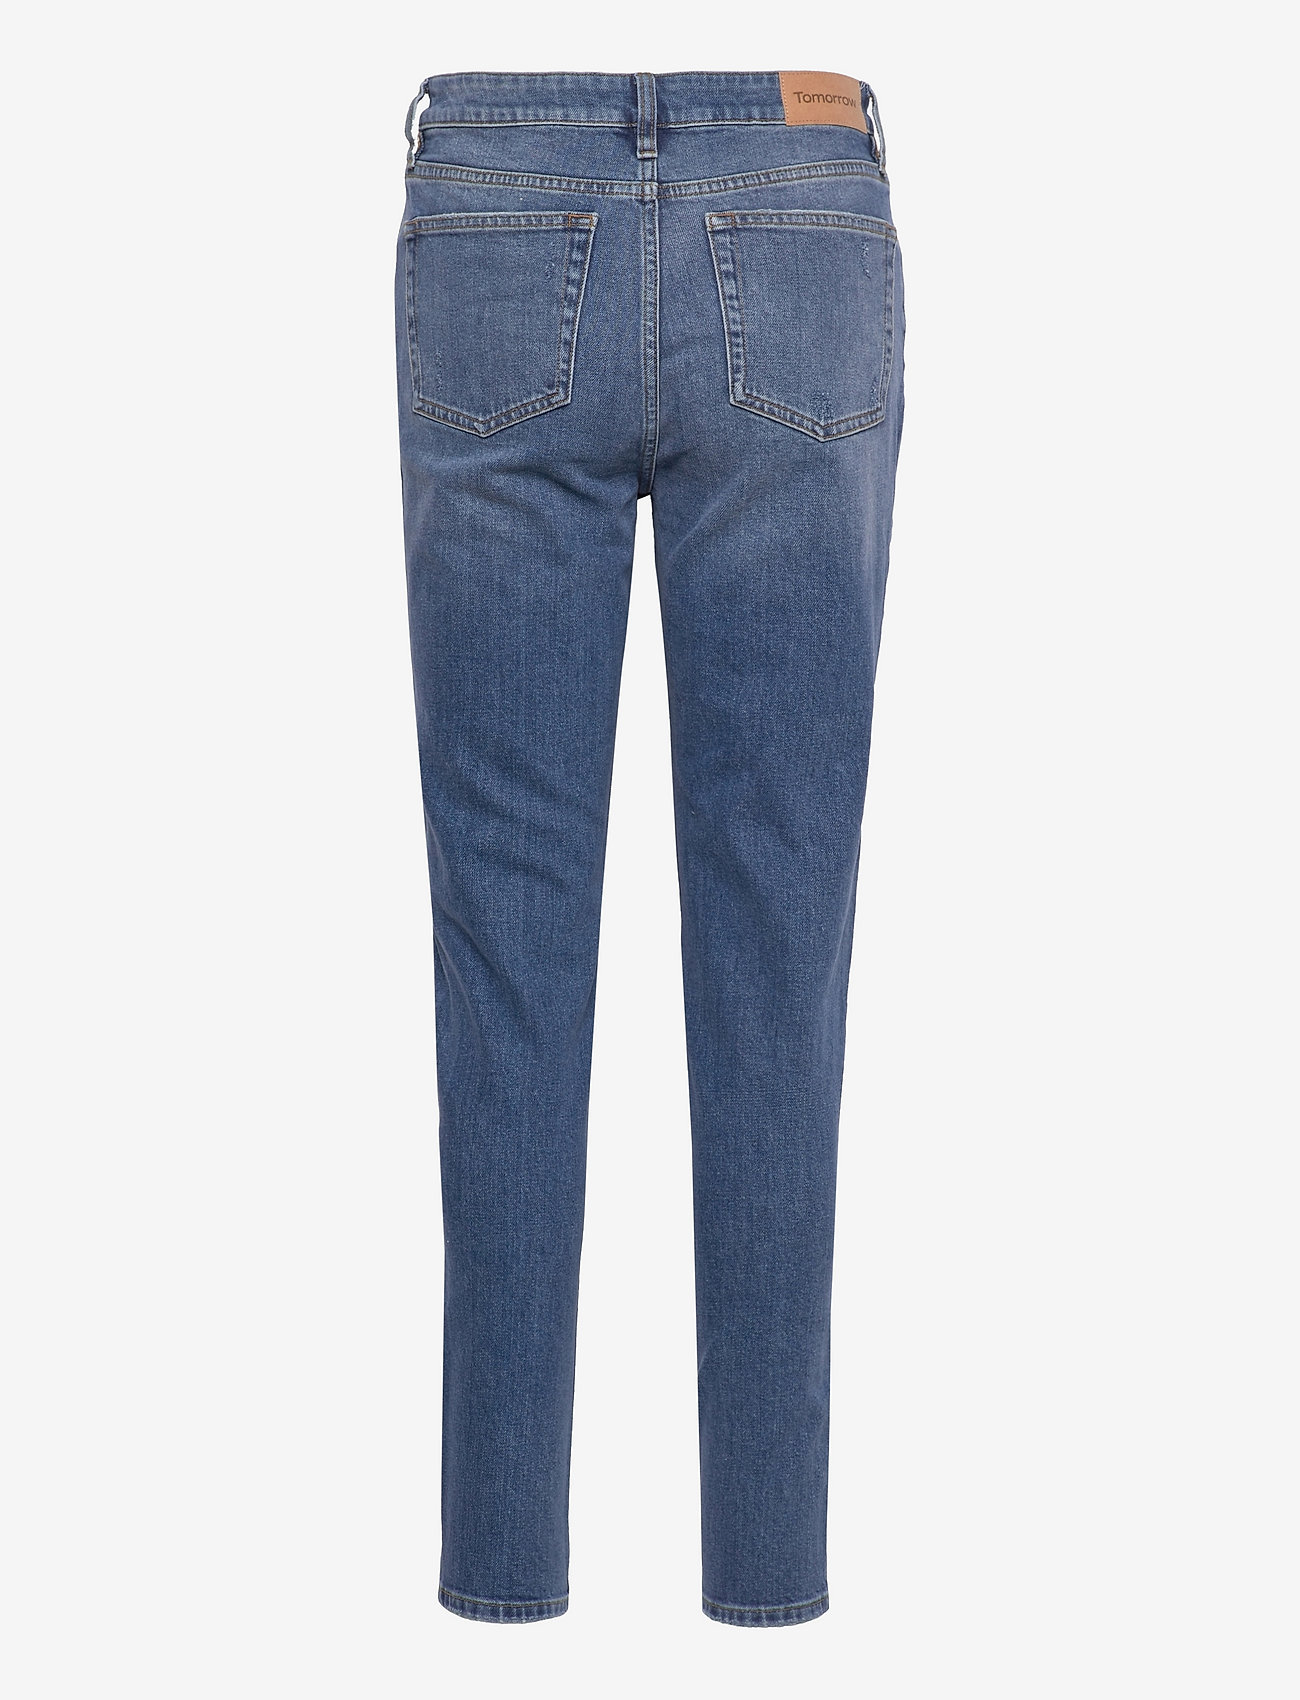 Tomorrow - Hepburn Jeans wash Brooklyn - slim jeans - denim blue - 1